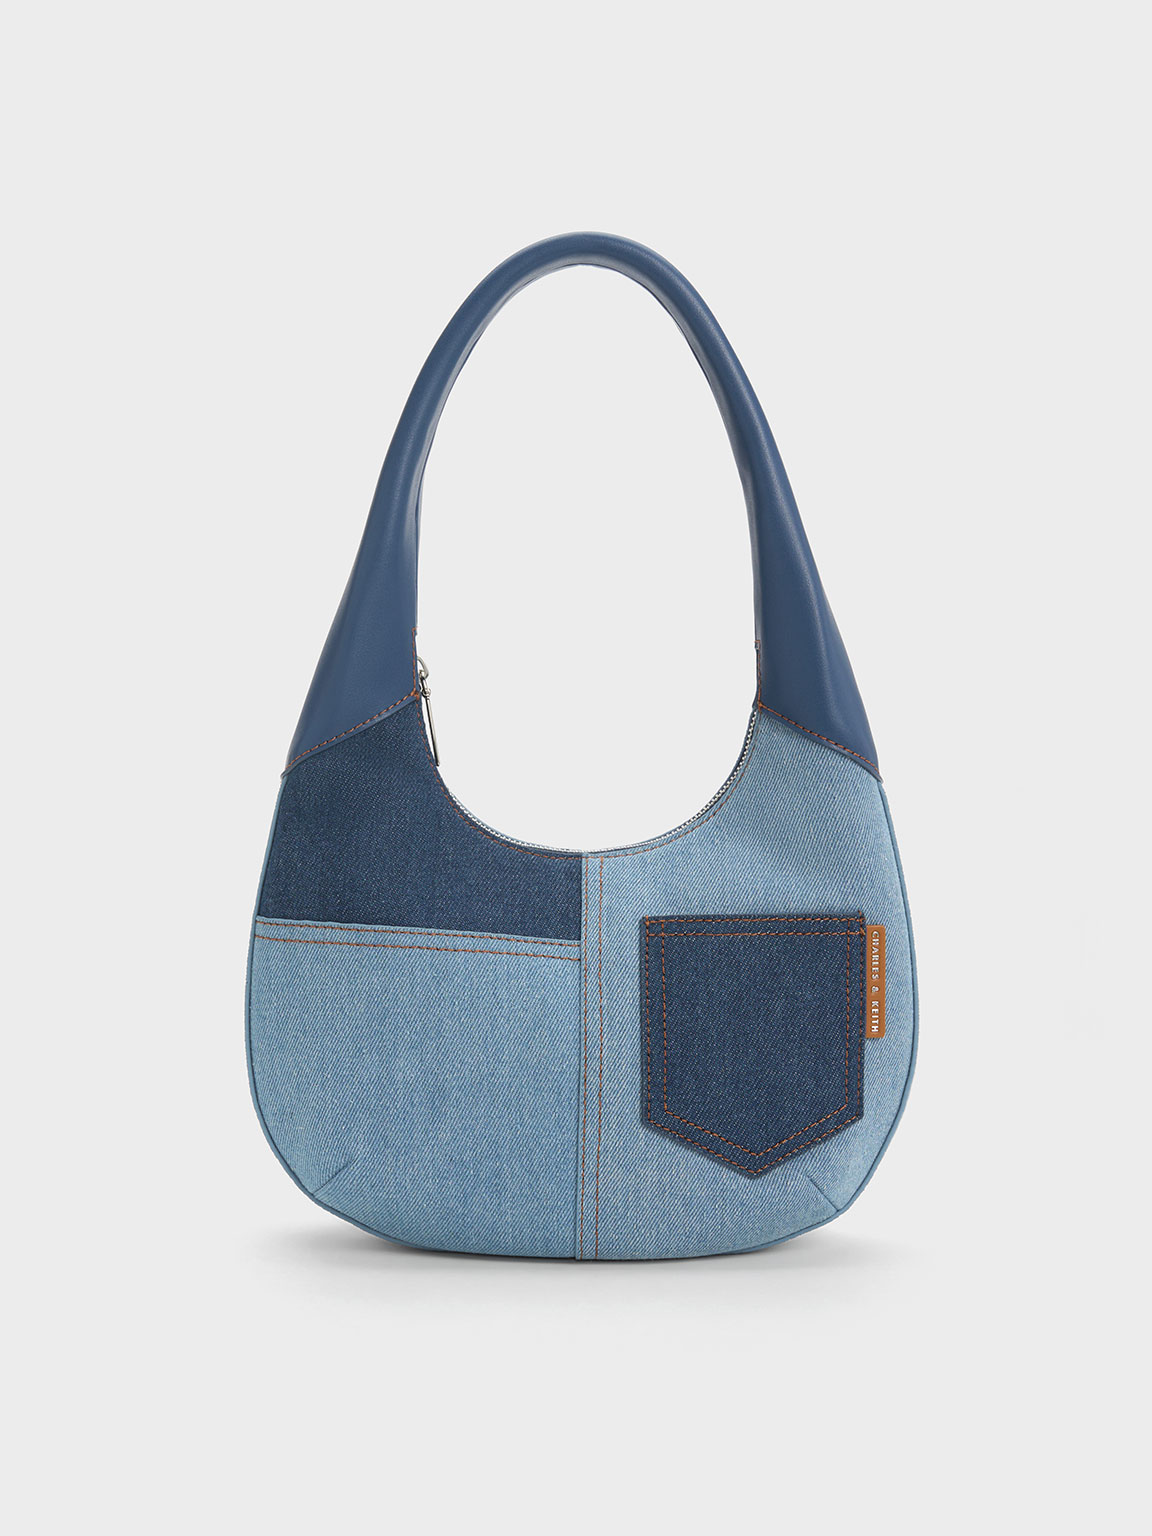 Mini mobile phone bag, stylish texture, one shoulder crossbody bag